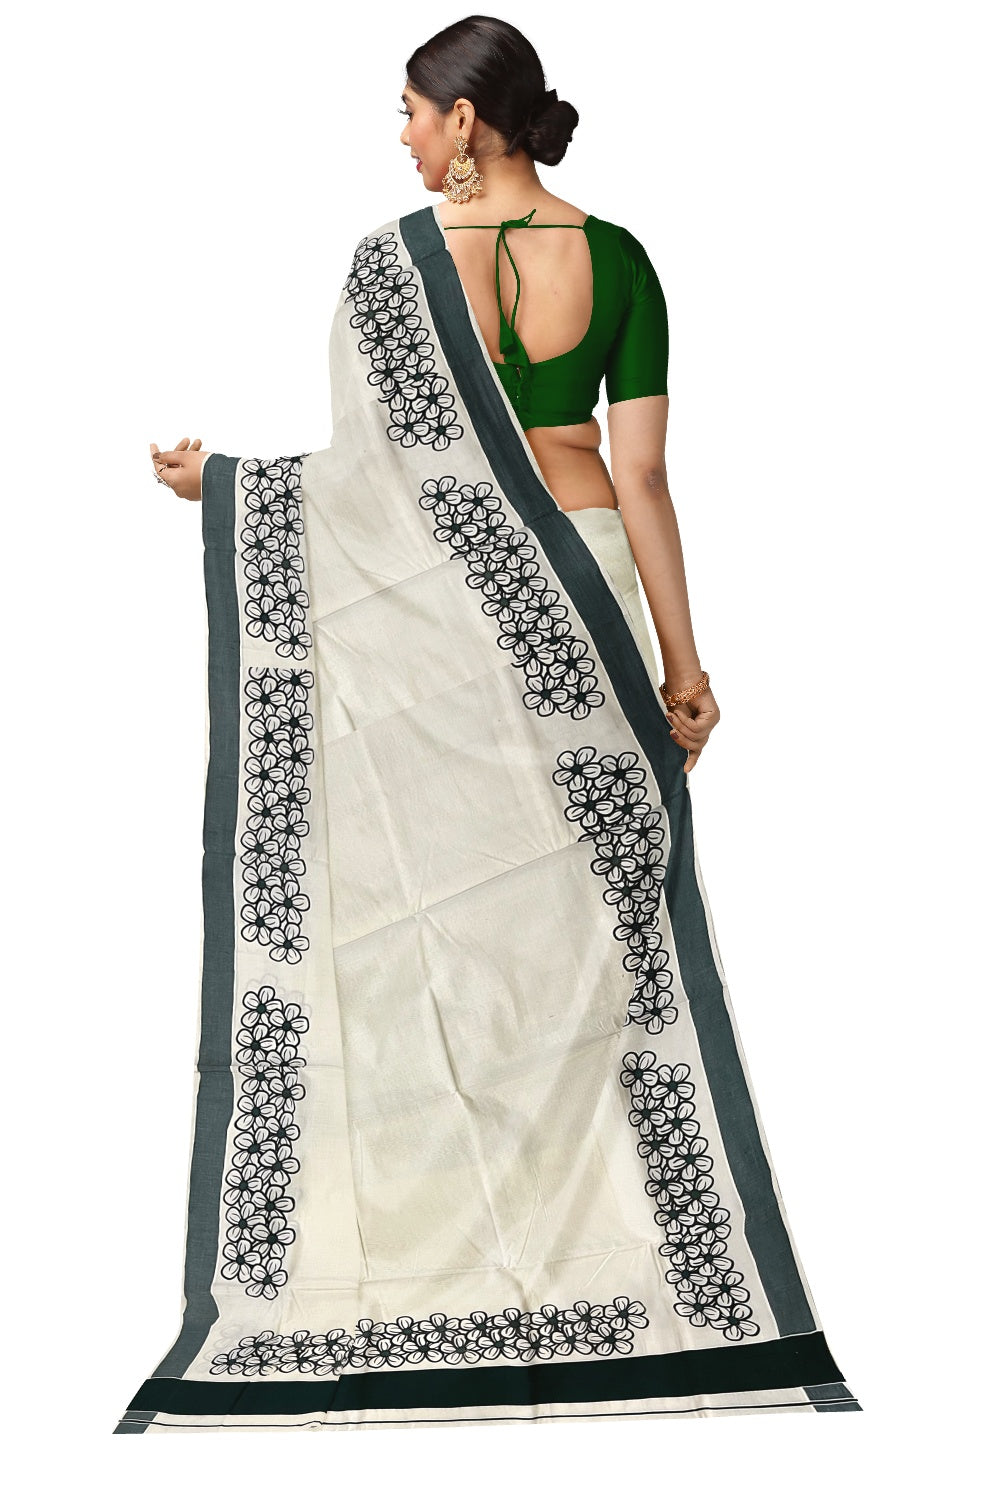 Pure Cotton Kerala Saree with Black Floral Block Prints and Dark Green Border